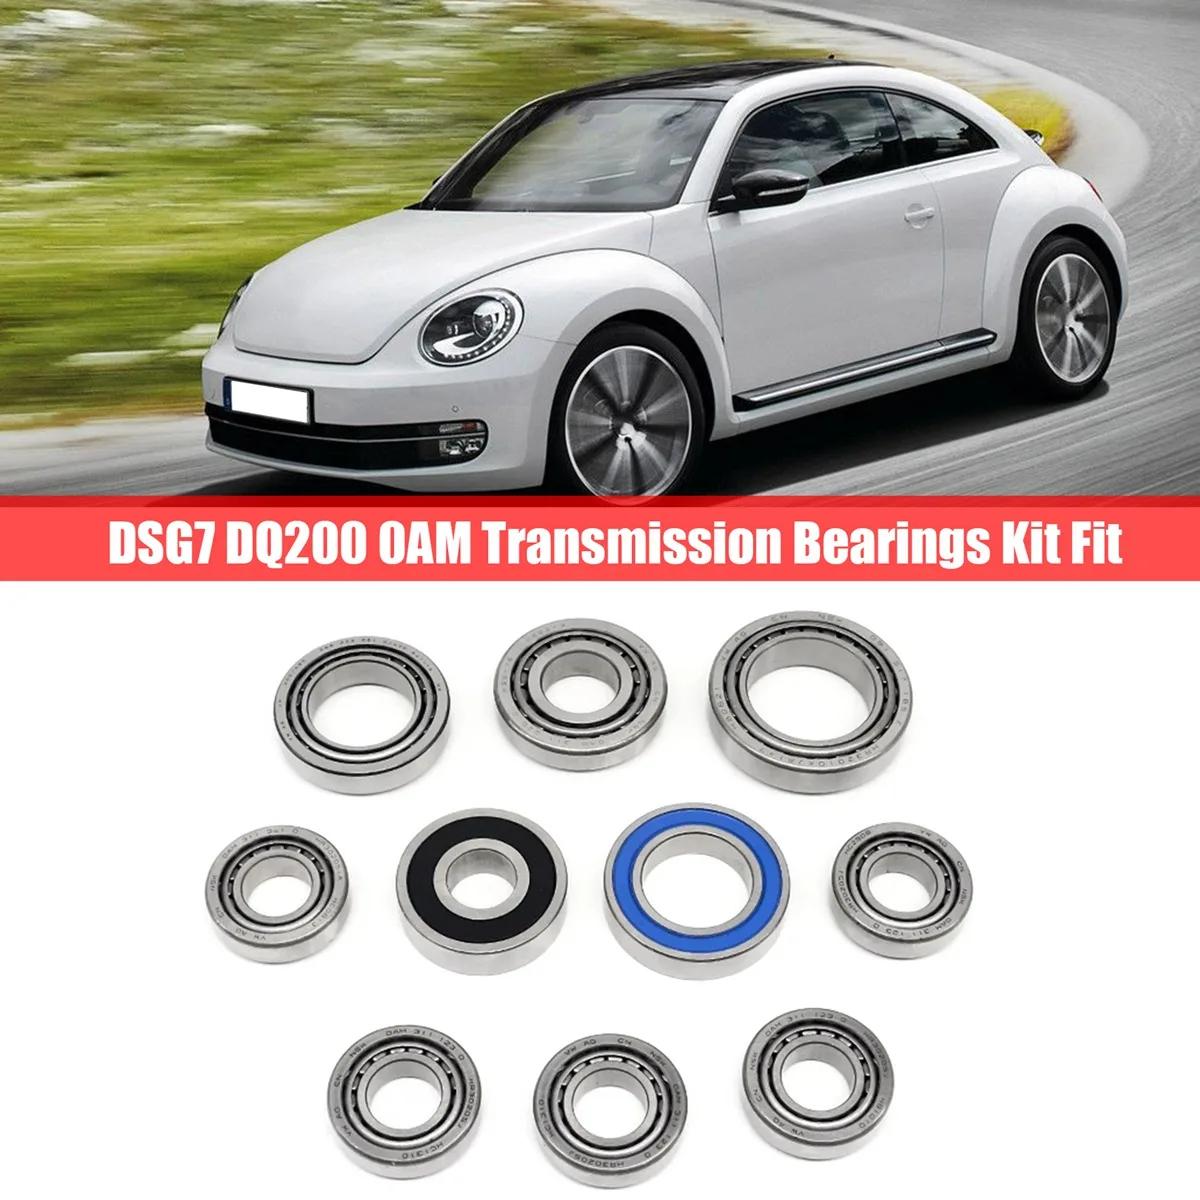 

10PCS DSG7 DQ200 0AM Transmission Bearings Kit Fit for VW AUDI SKODA 7-Speed